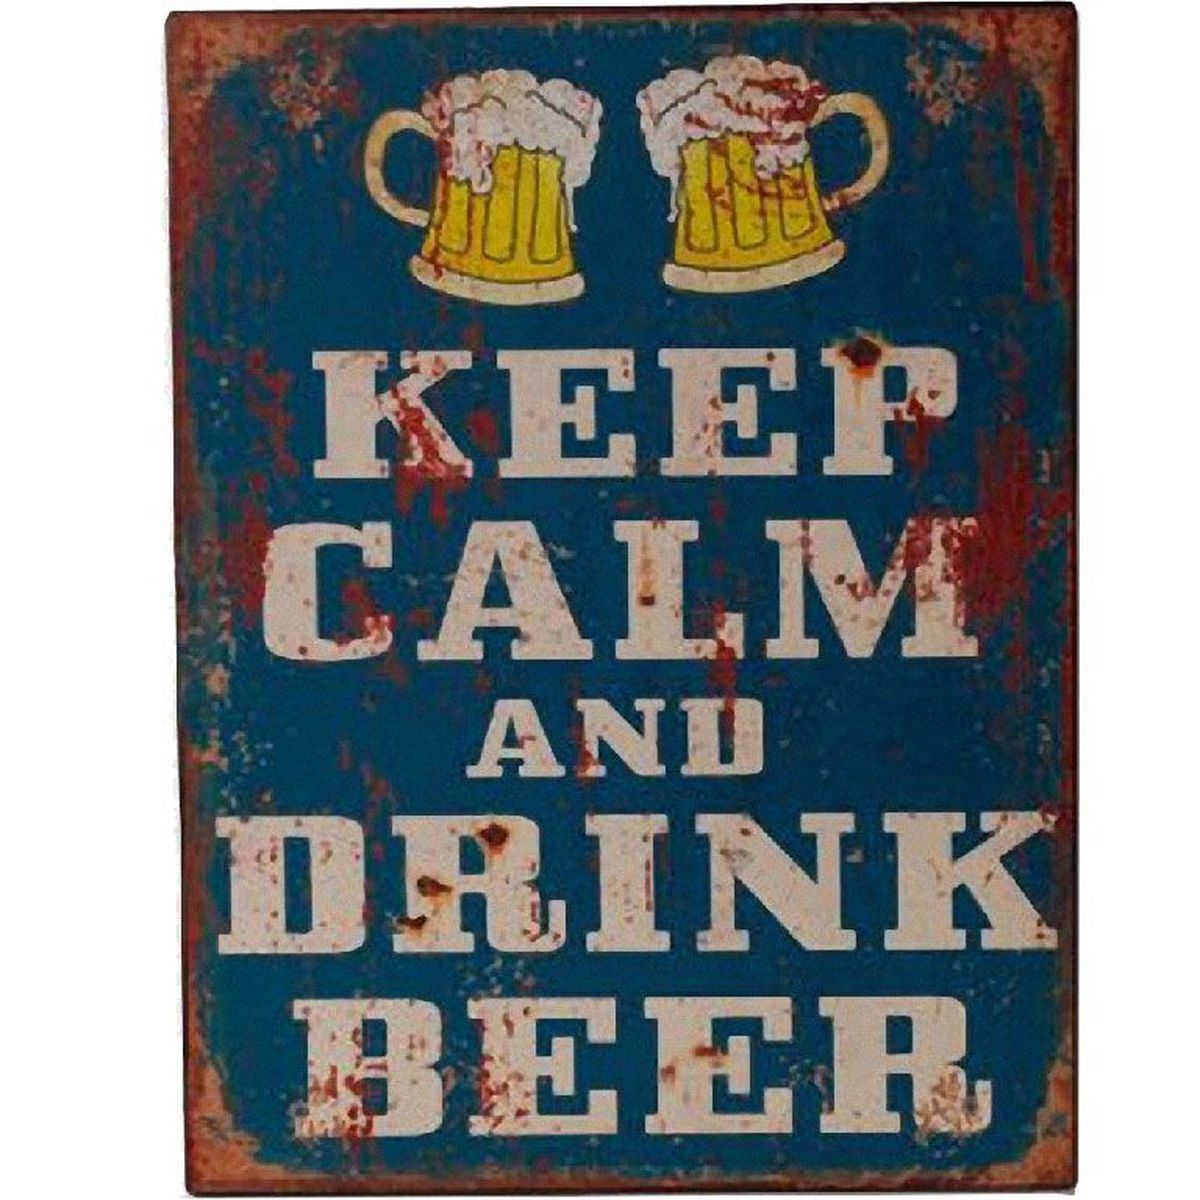 Keep Calm and Drink Beer metal plate Deco